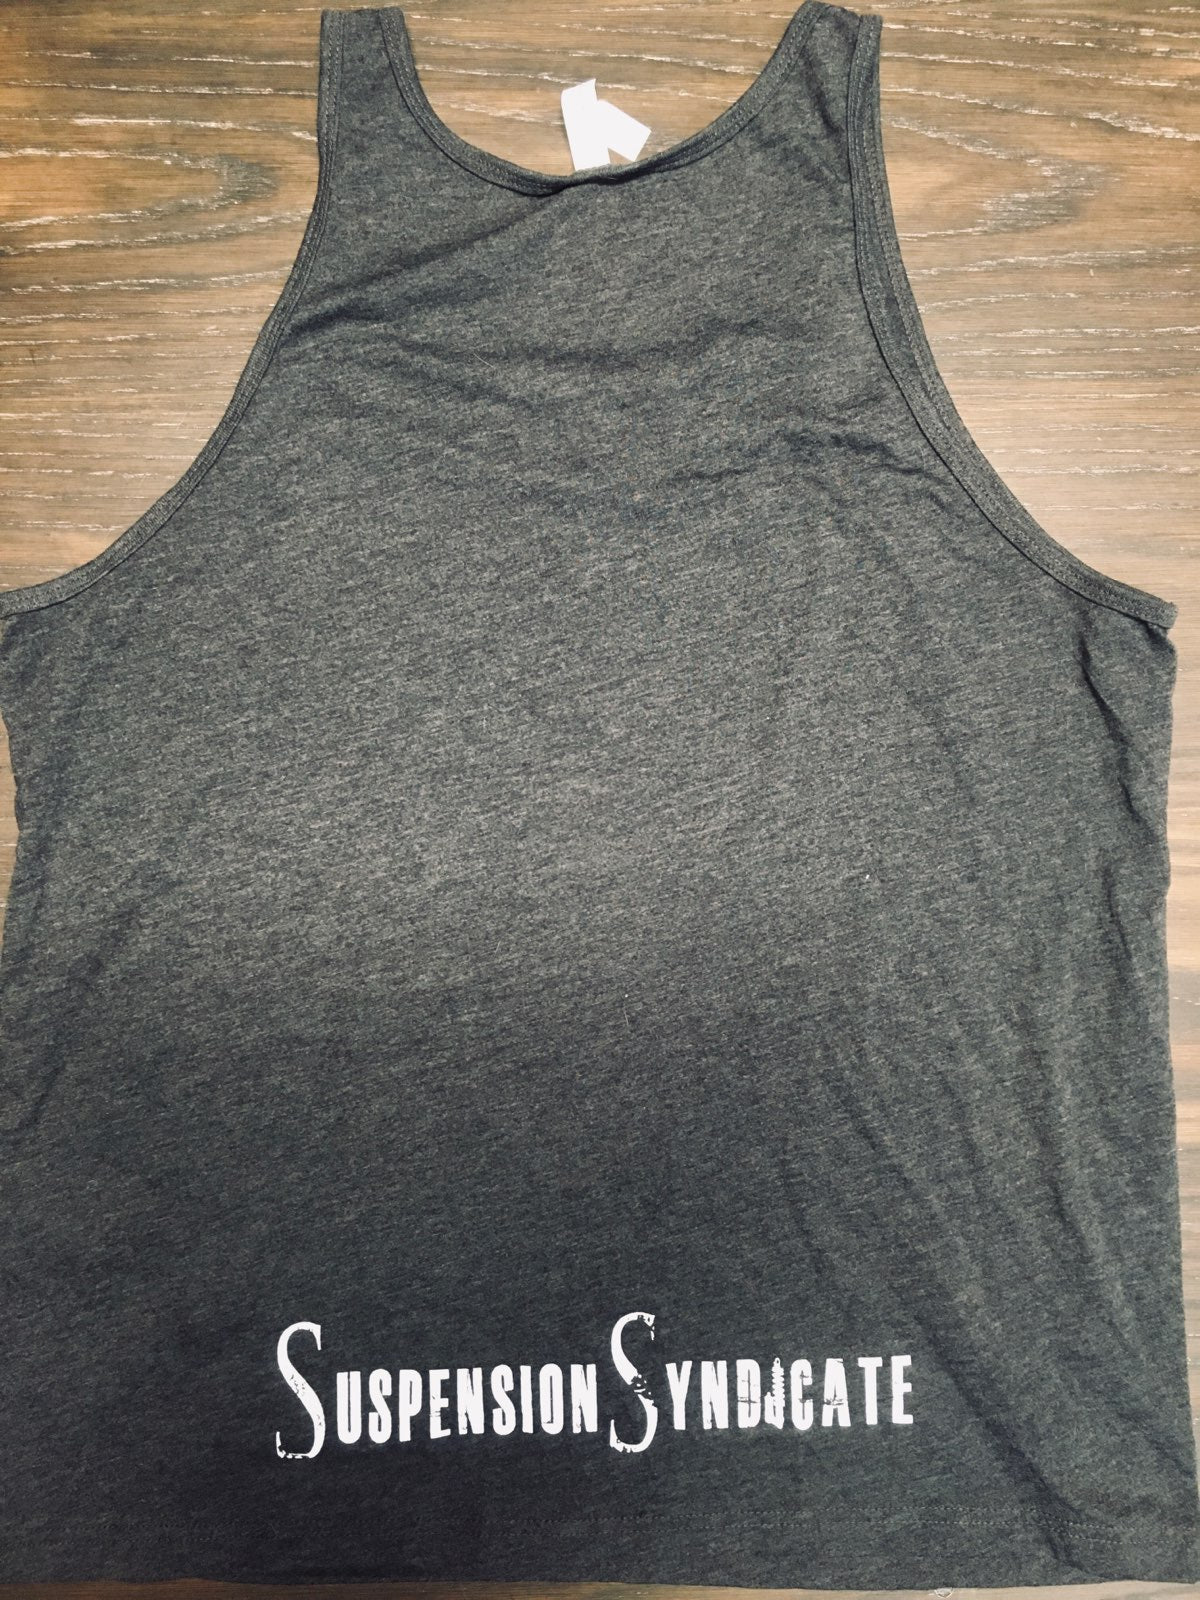 Suspension Syndicate Tonic sleeveless Tank Top T-shirt, heather grey